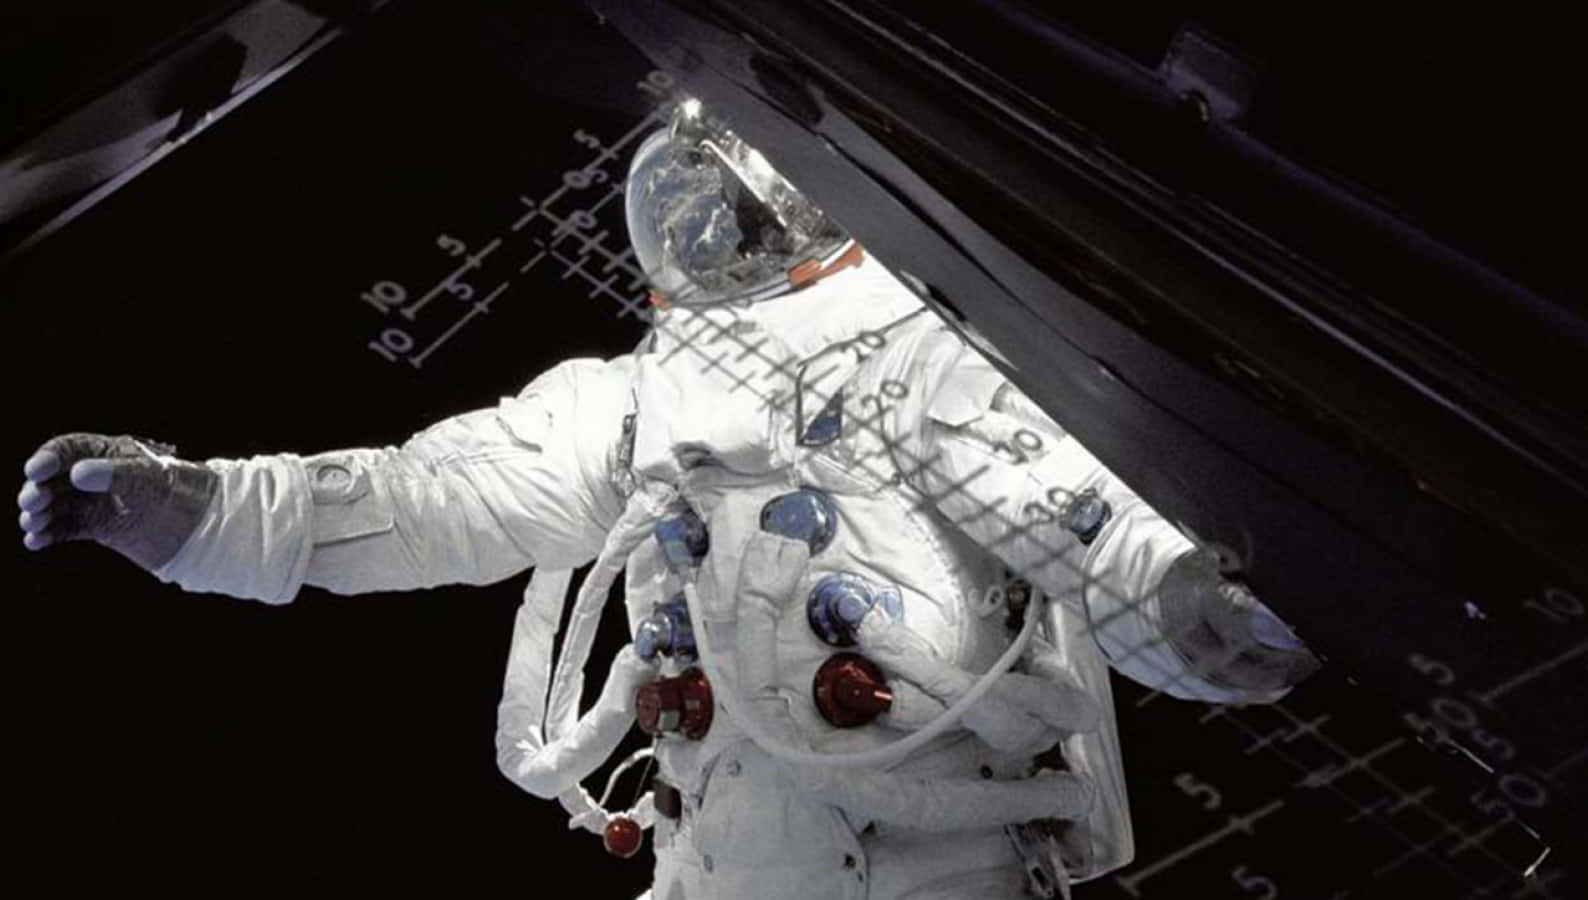 Astronaut Neil Armstrong documents the Apollo 11 Moon Landing